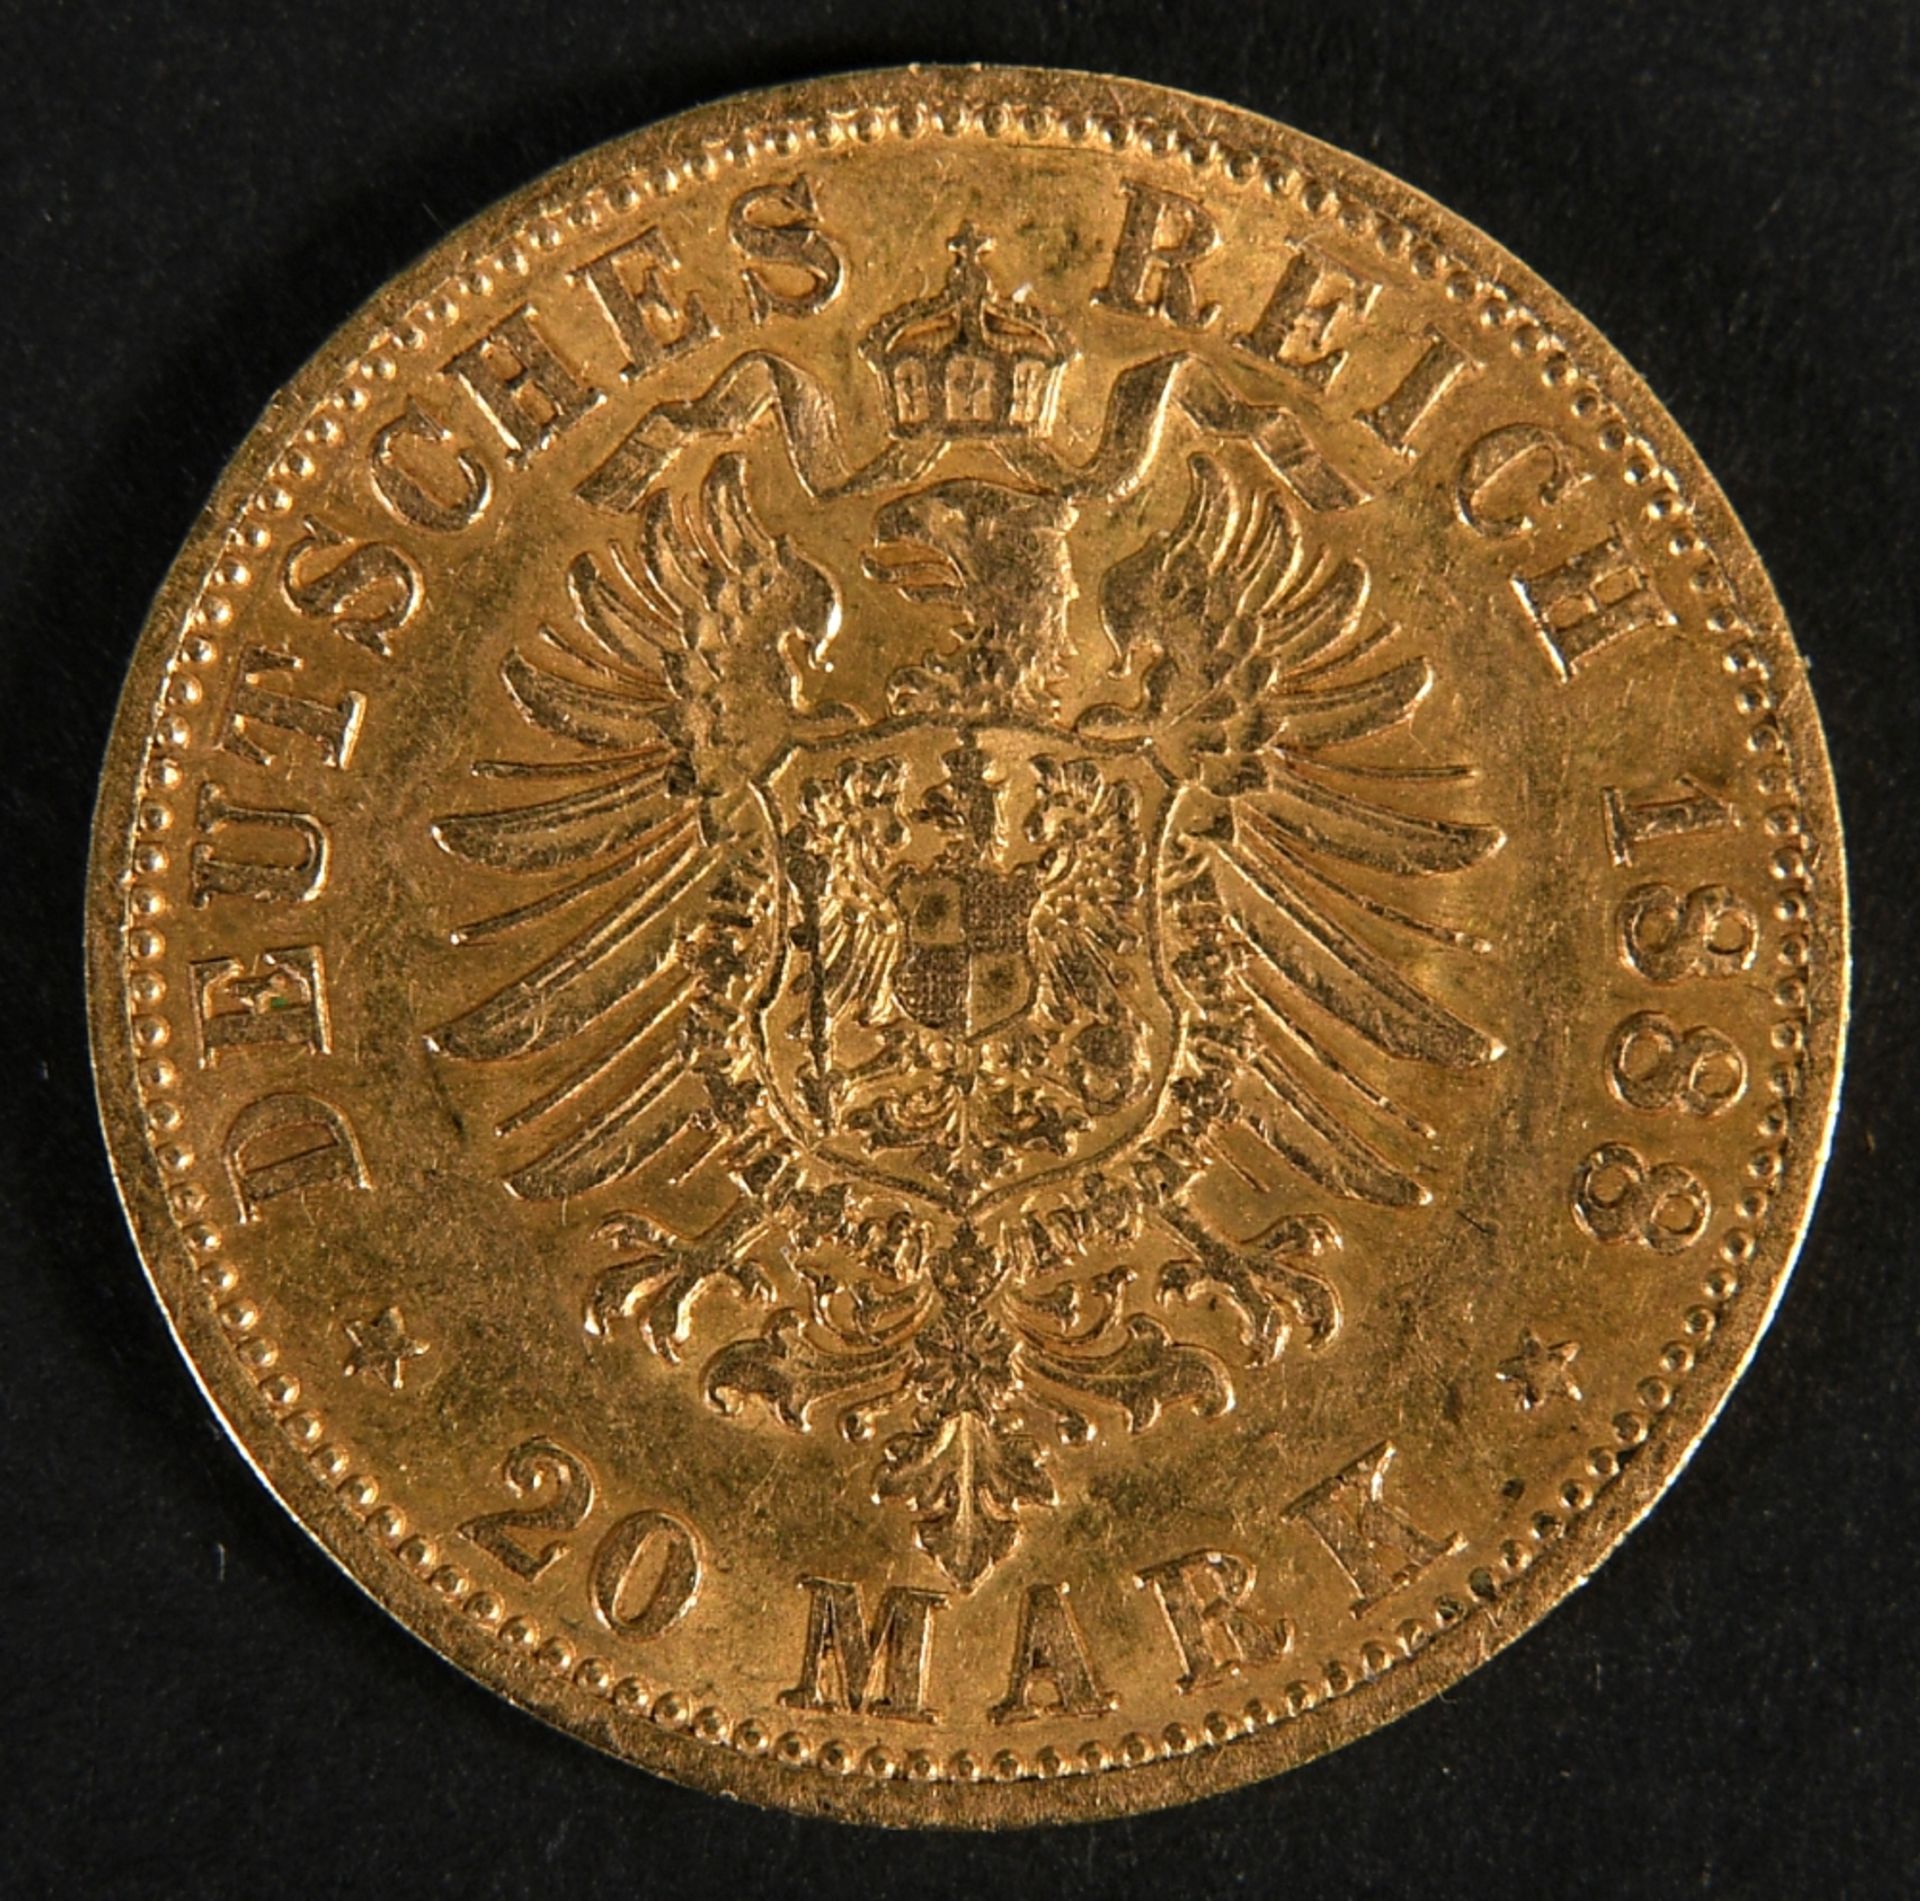 Münze - Goldmünze "20 Mark 1888" - Image 3 of 3